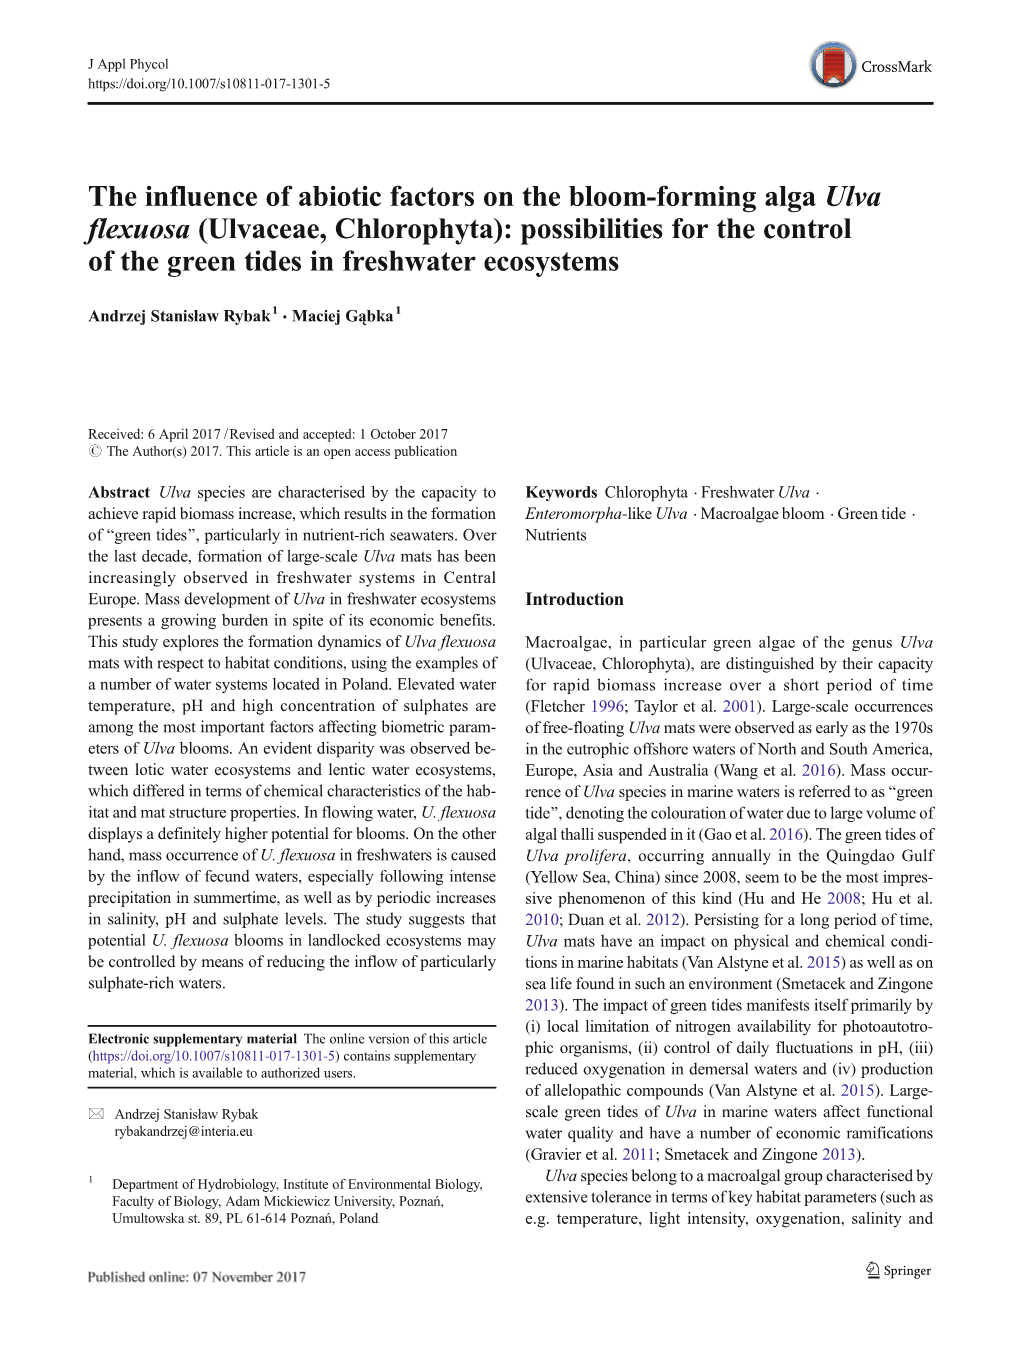 The Influence of Abiotic Factors on the Bloom-Forming Alga Ulva Flexuosa